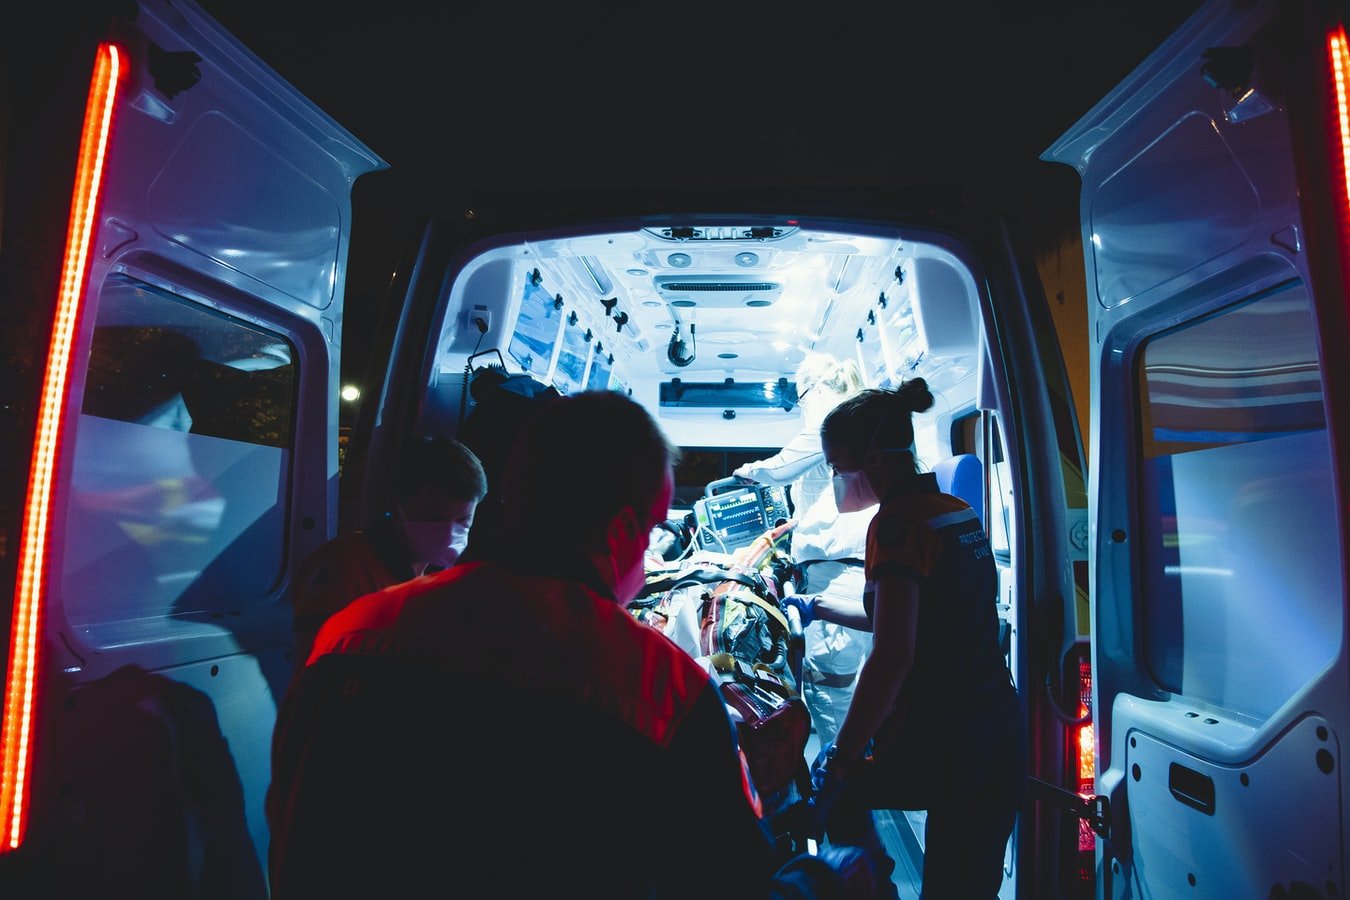 In the ambulance | Source: Unsplash